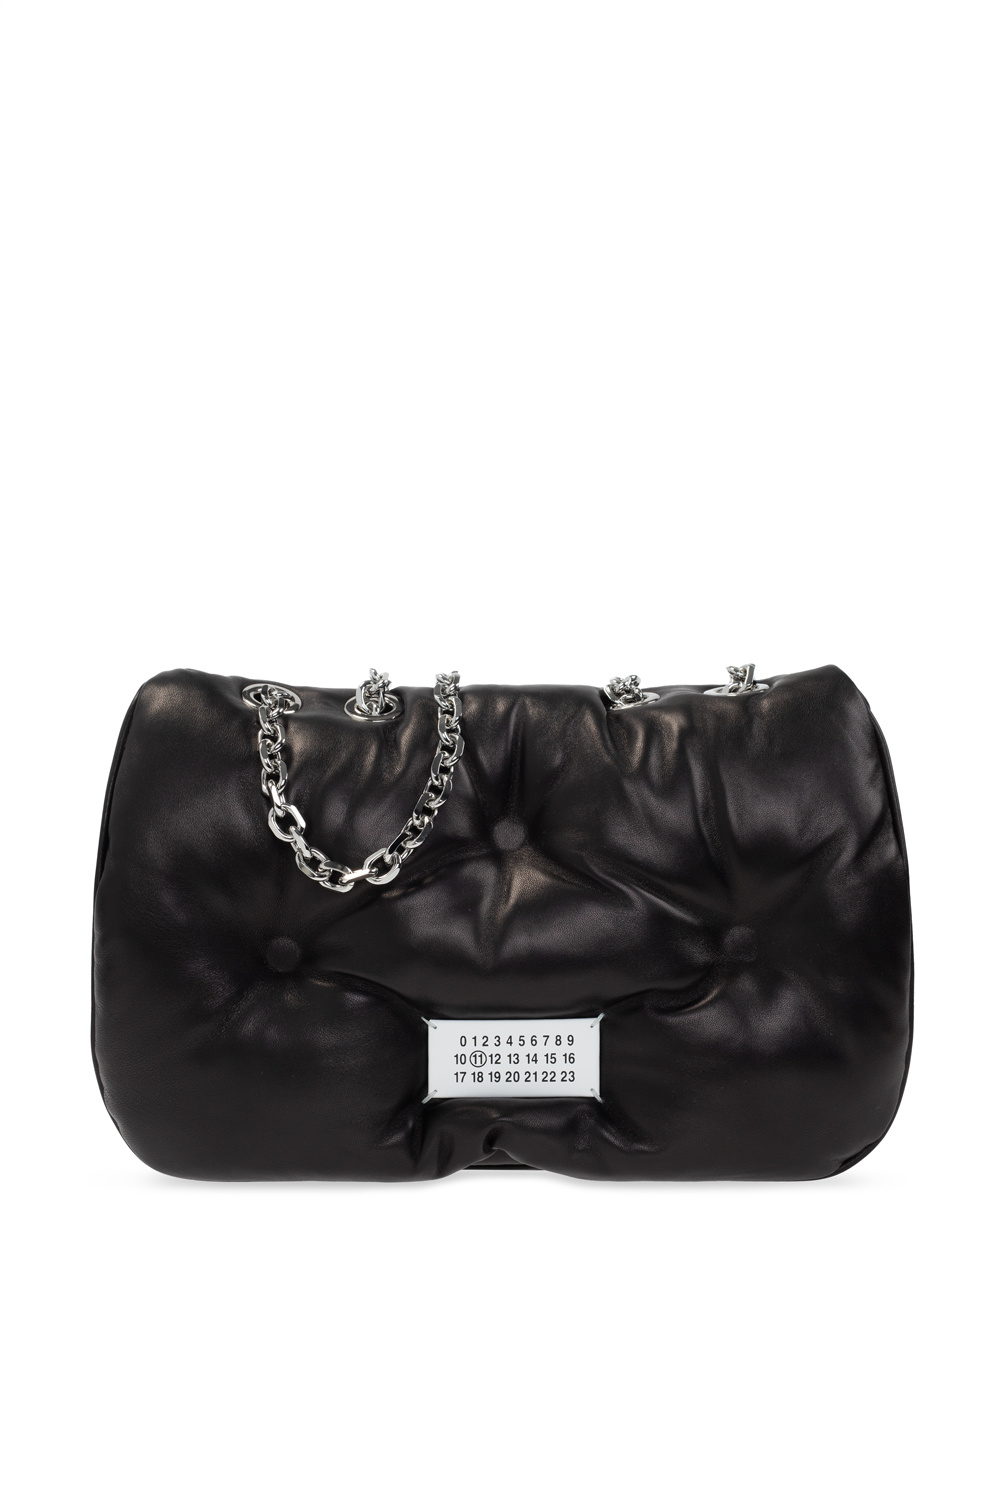 Maison Margiela Glam Slam Burgundy Leather Chain Shoulder Bag